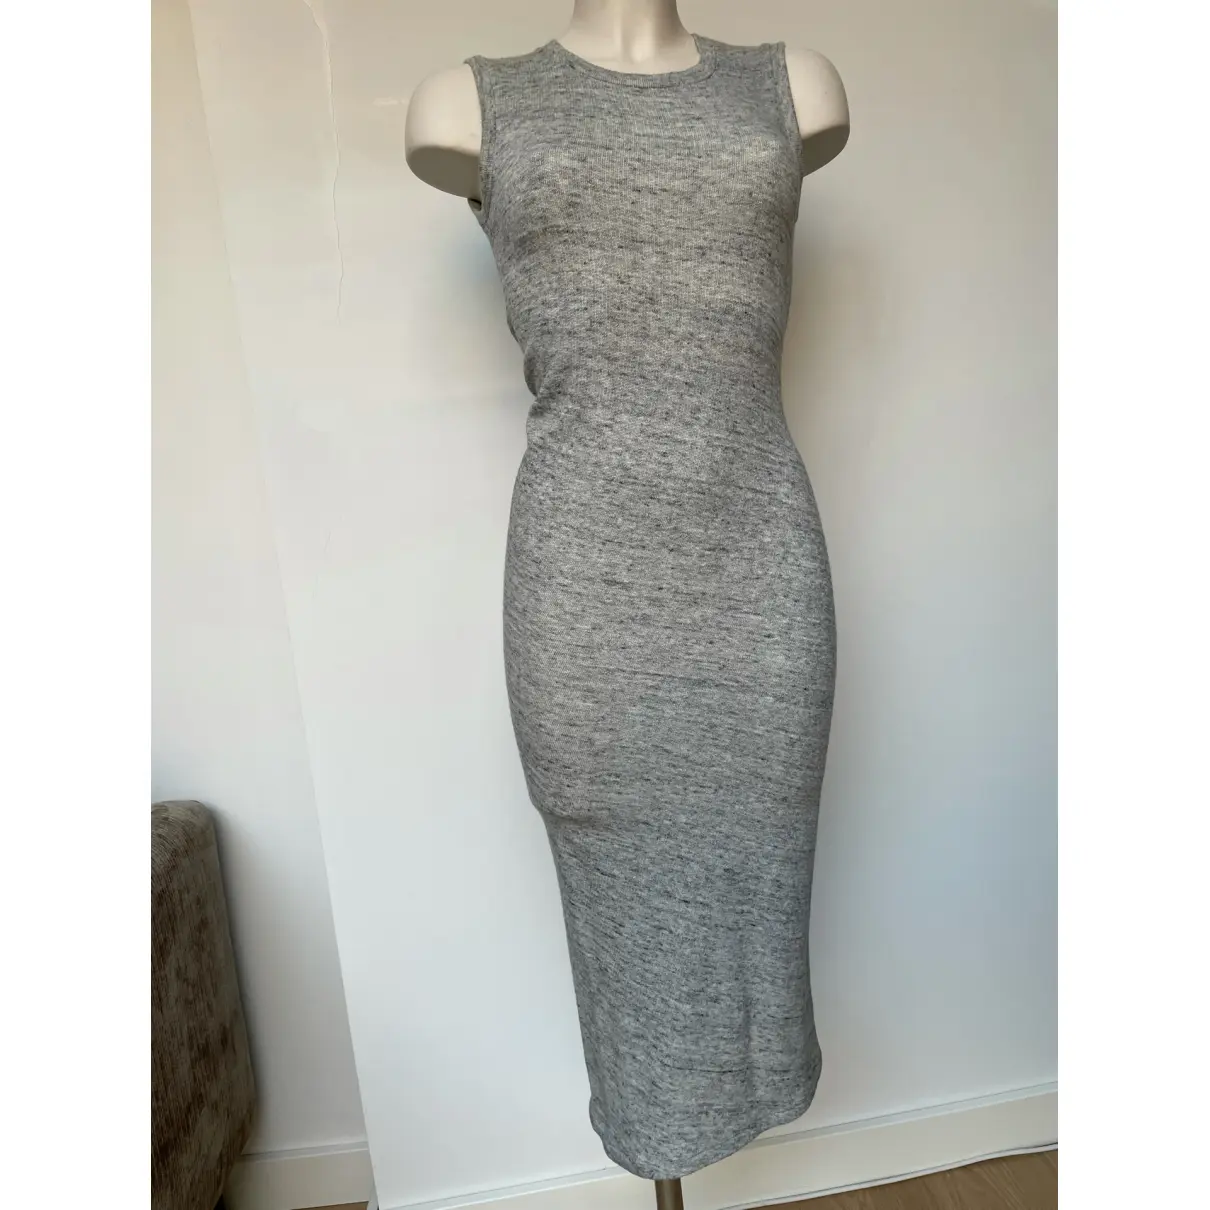 Buy Denham Maxi dress online